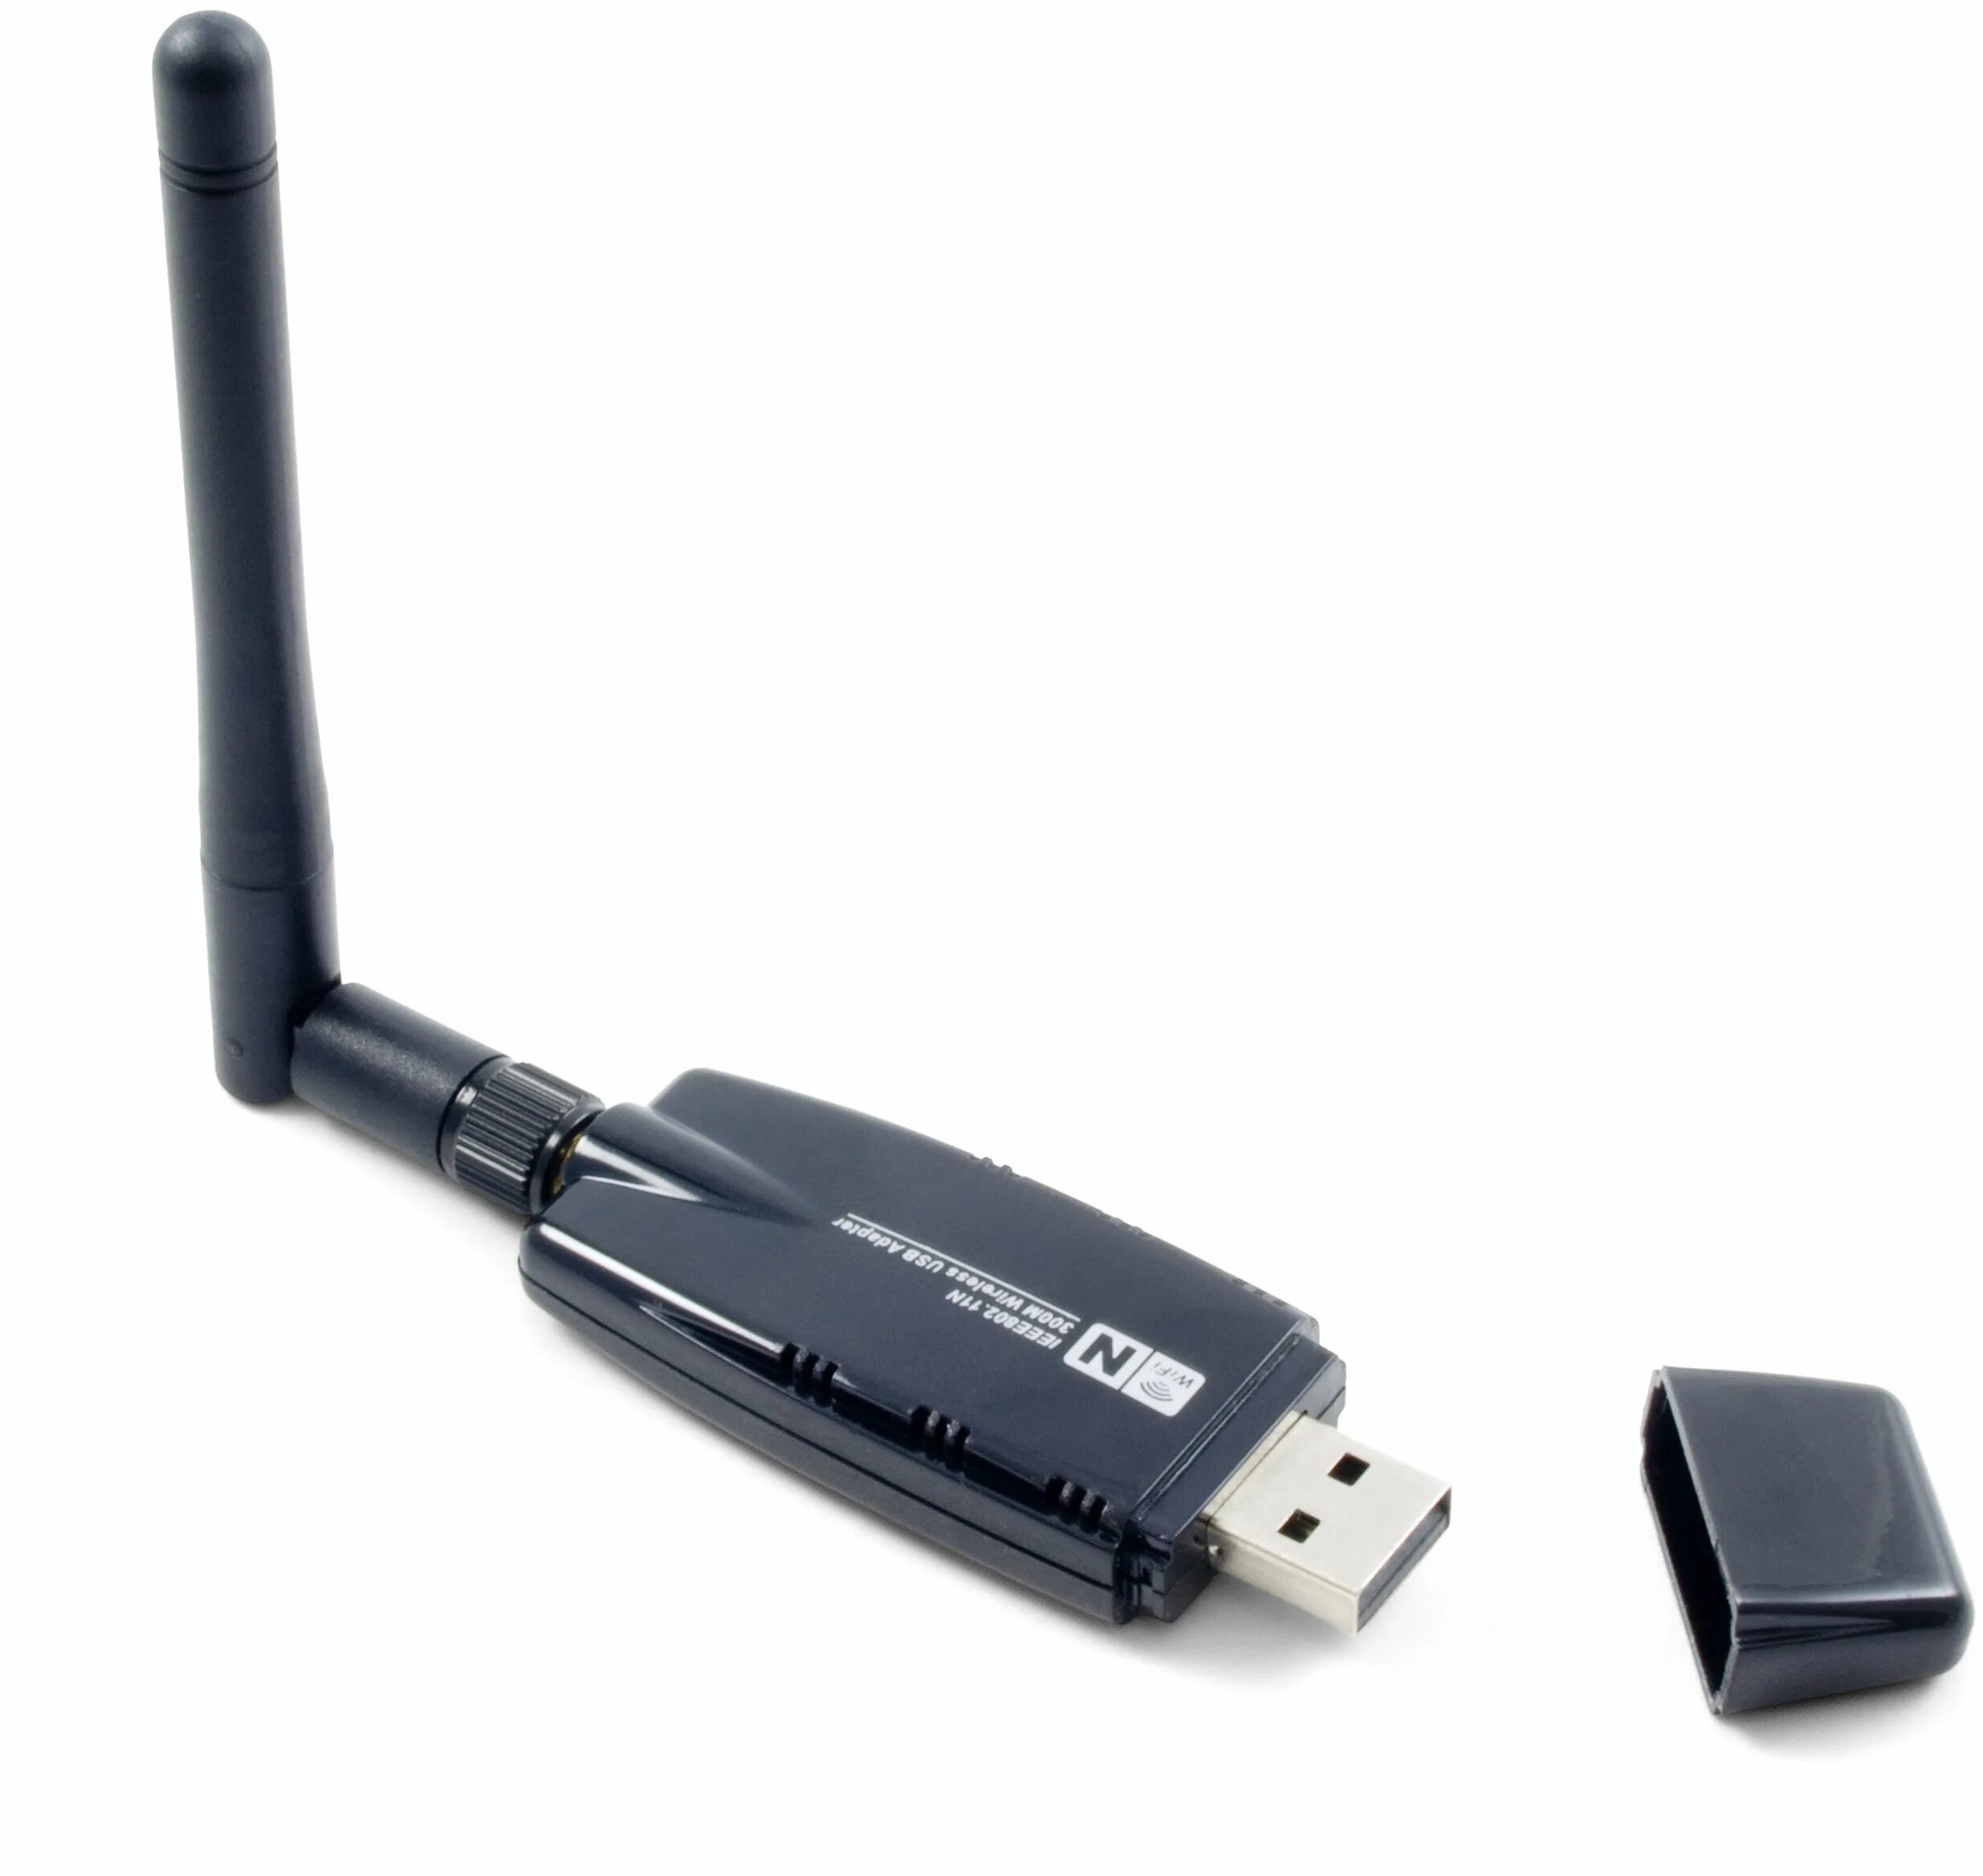 Wi fi direct adapter. Wireless 11n USB Adapter. WIFI USB адаптер n300. Адаптер Wi-Fi USB 300. Wi Fi адаптер 802.11 n WLAN.